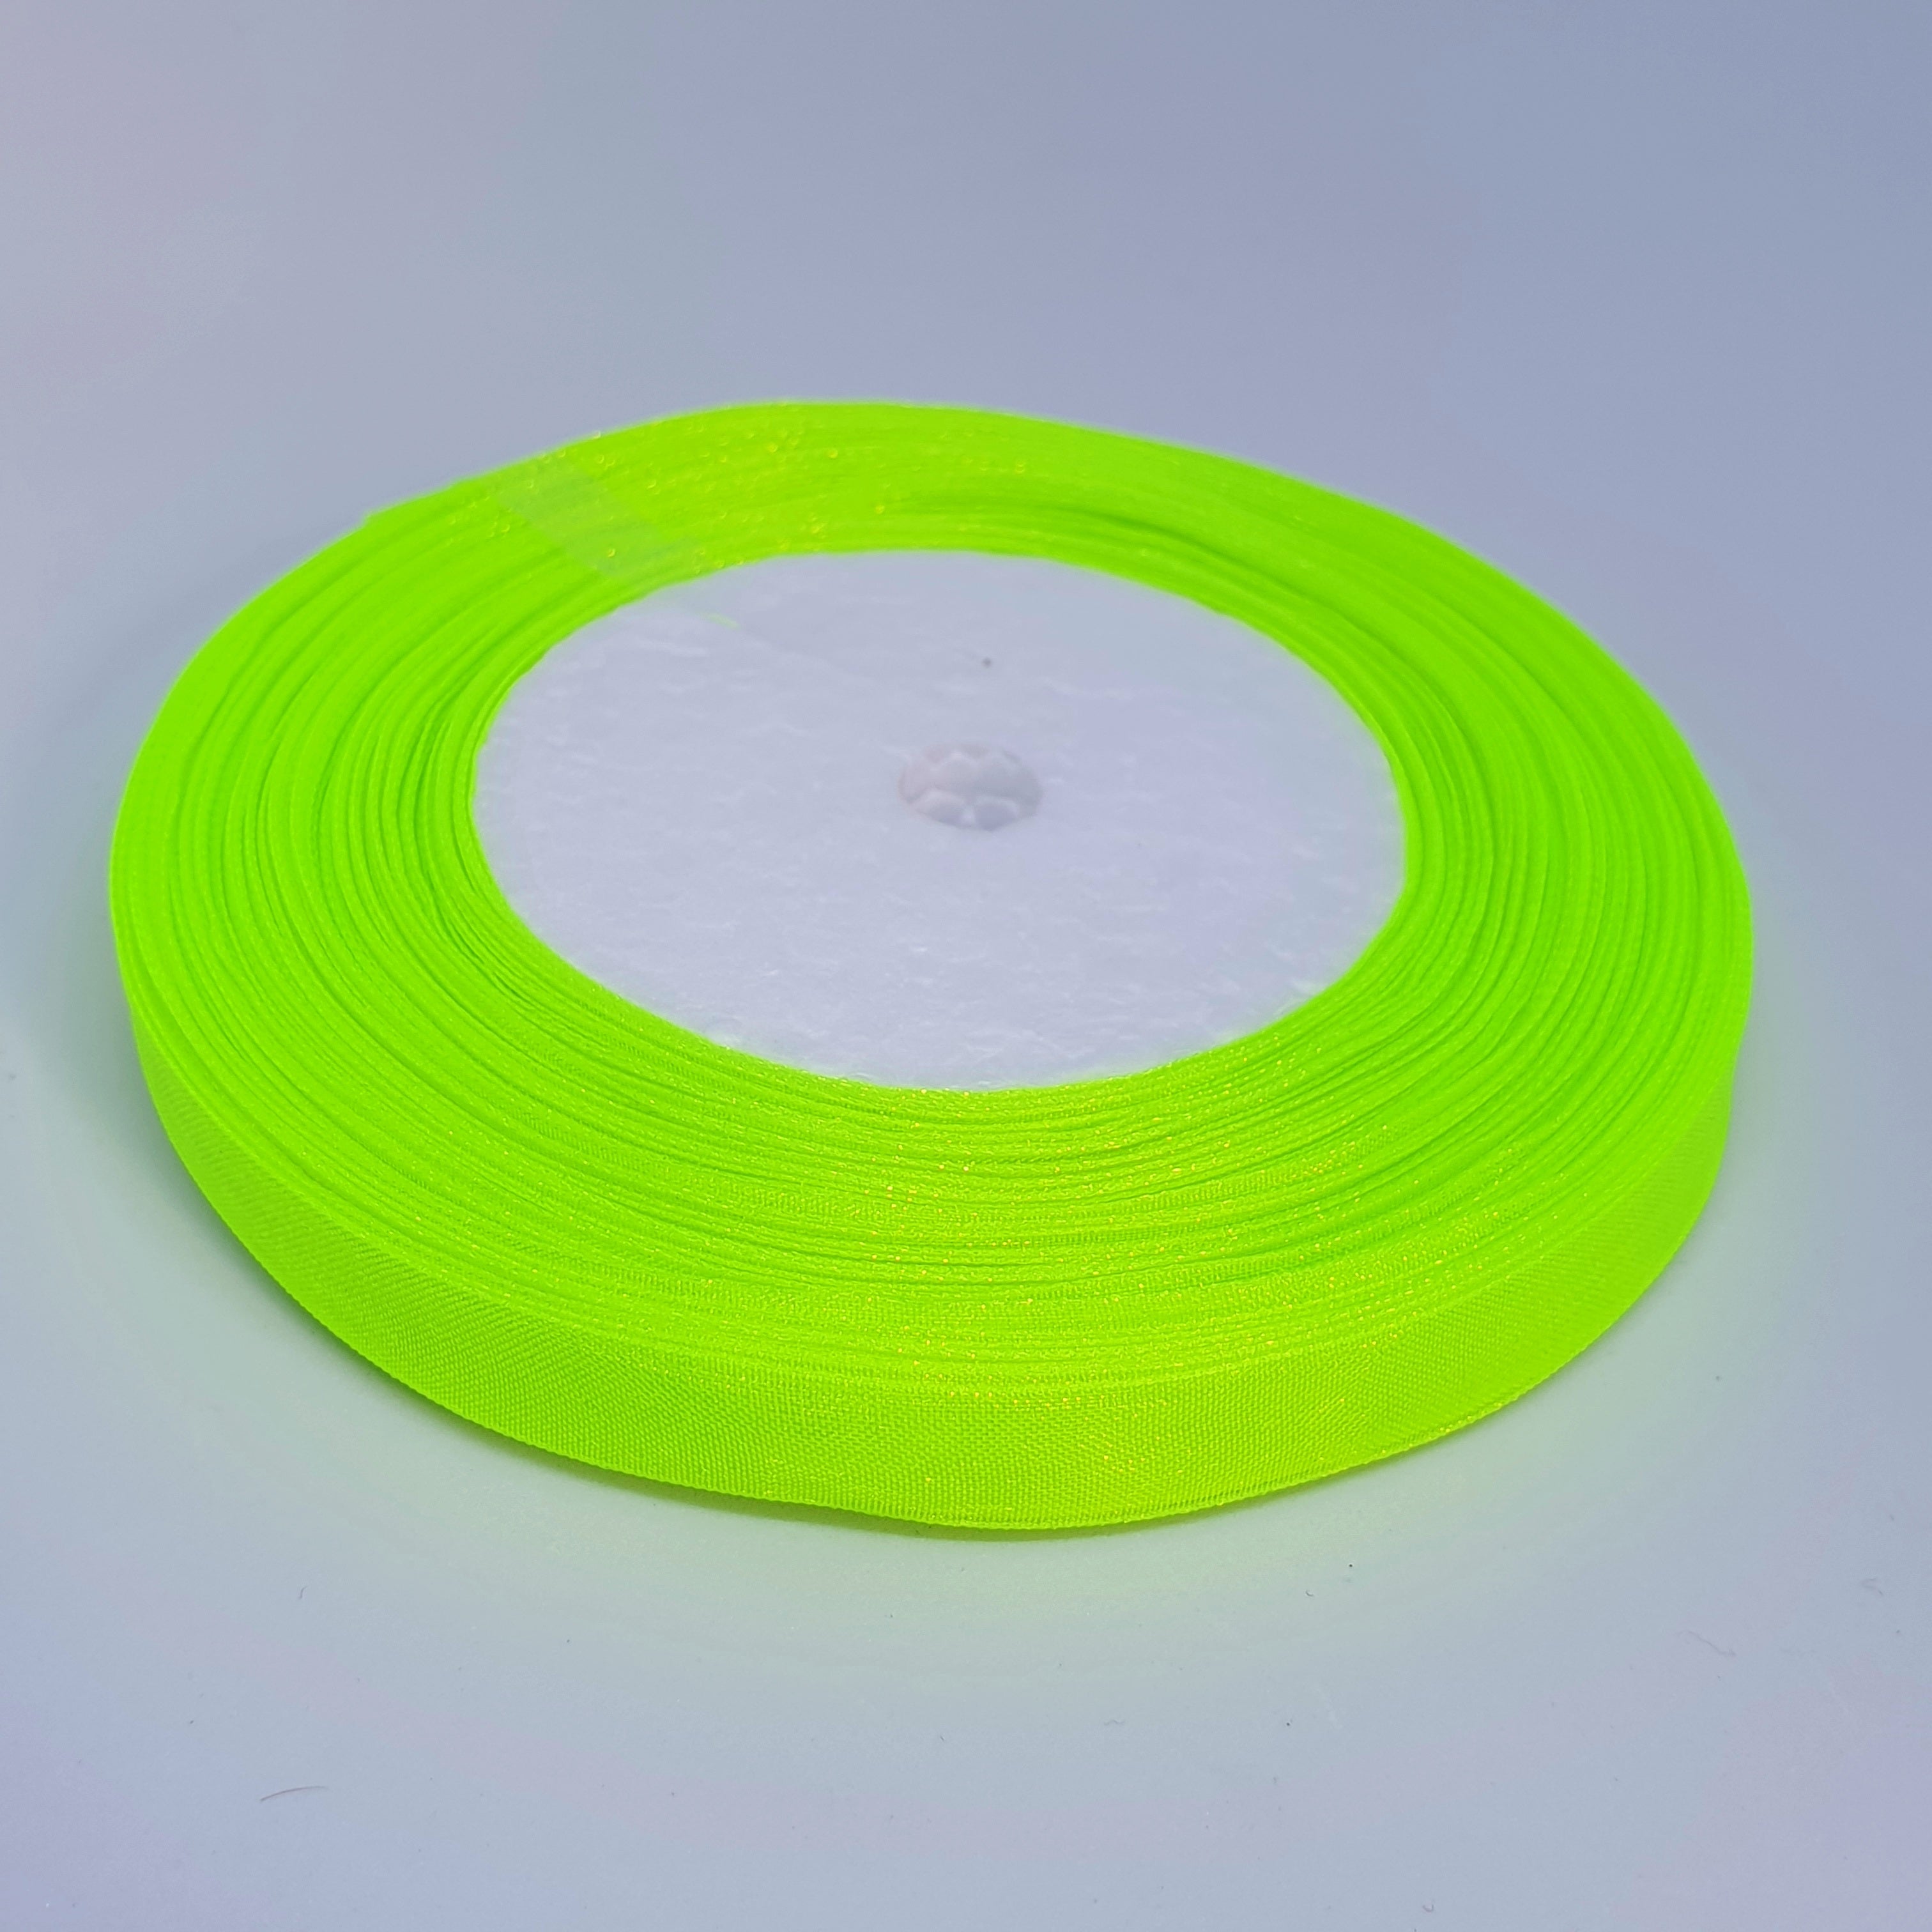 MajorCrafts 10mm 45metres Neon Green Sheer Organza Fabric Ribbon Roll R57